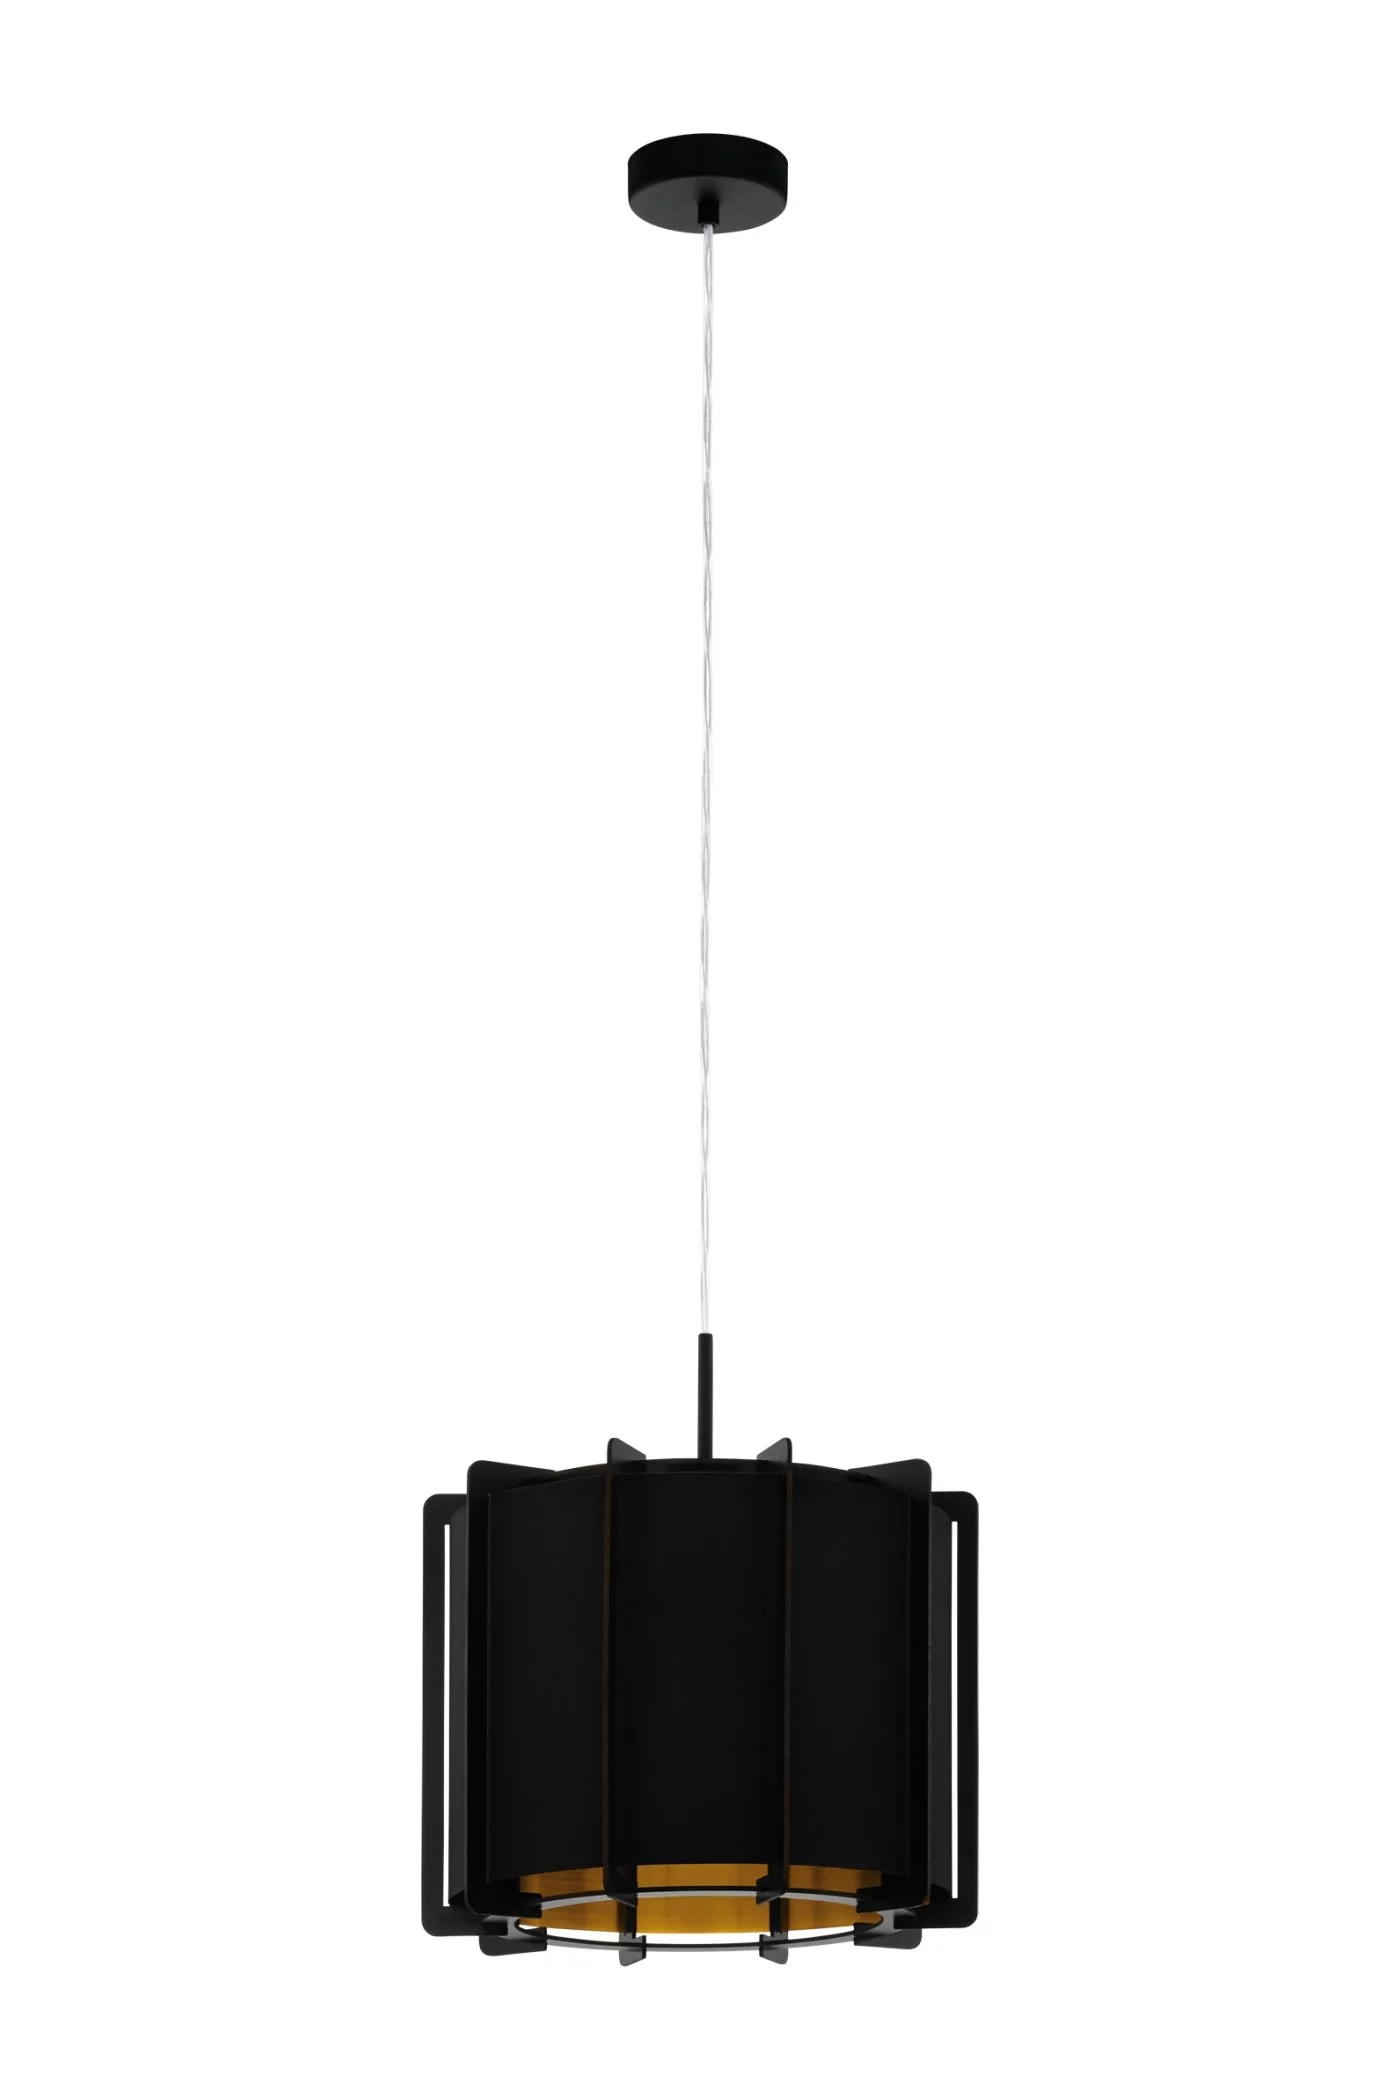   
                        Люстра EGLO  (Австрия) 26301    
                         в стиле Лофт.  
                        Тип источника света: светодиодная лампа, сменная.                         Форма: Цилиндр.                         Цвета плафонов и подвесок: Черный, Золото.                         Материал: Дерево.                          фото 1